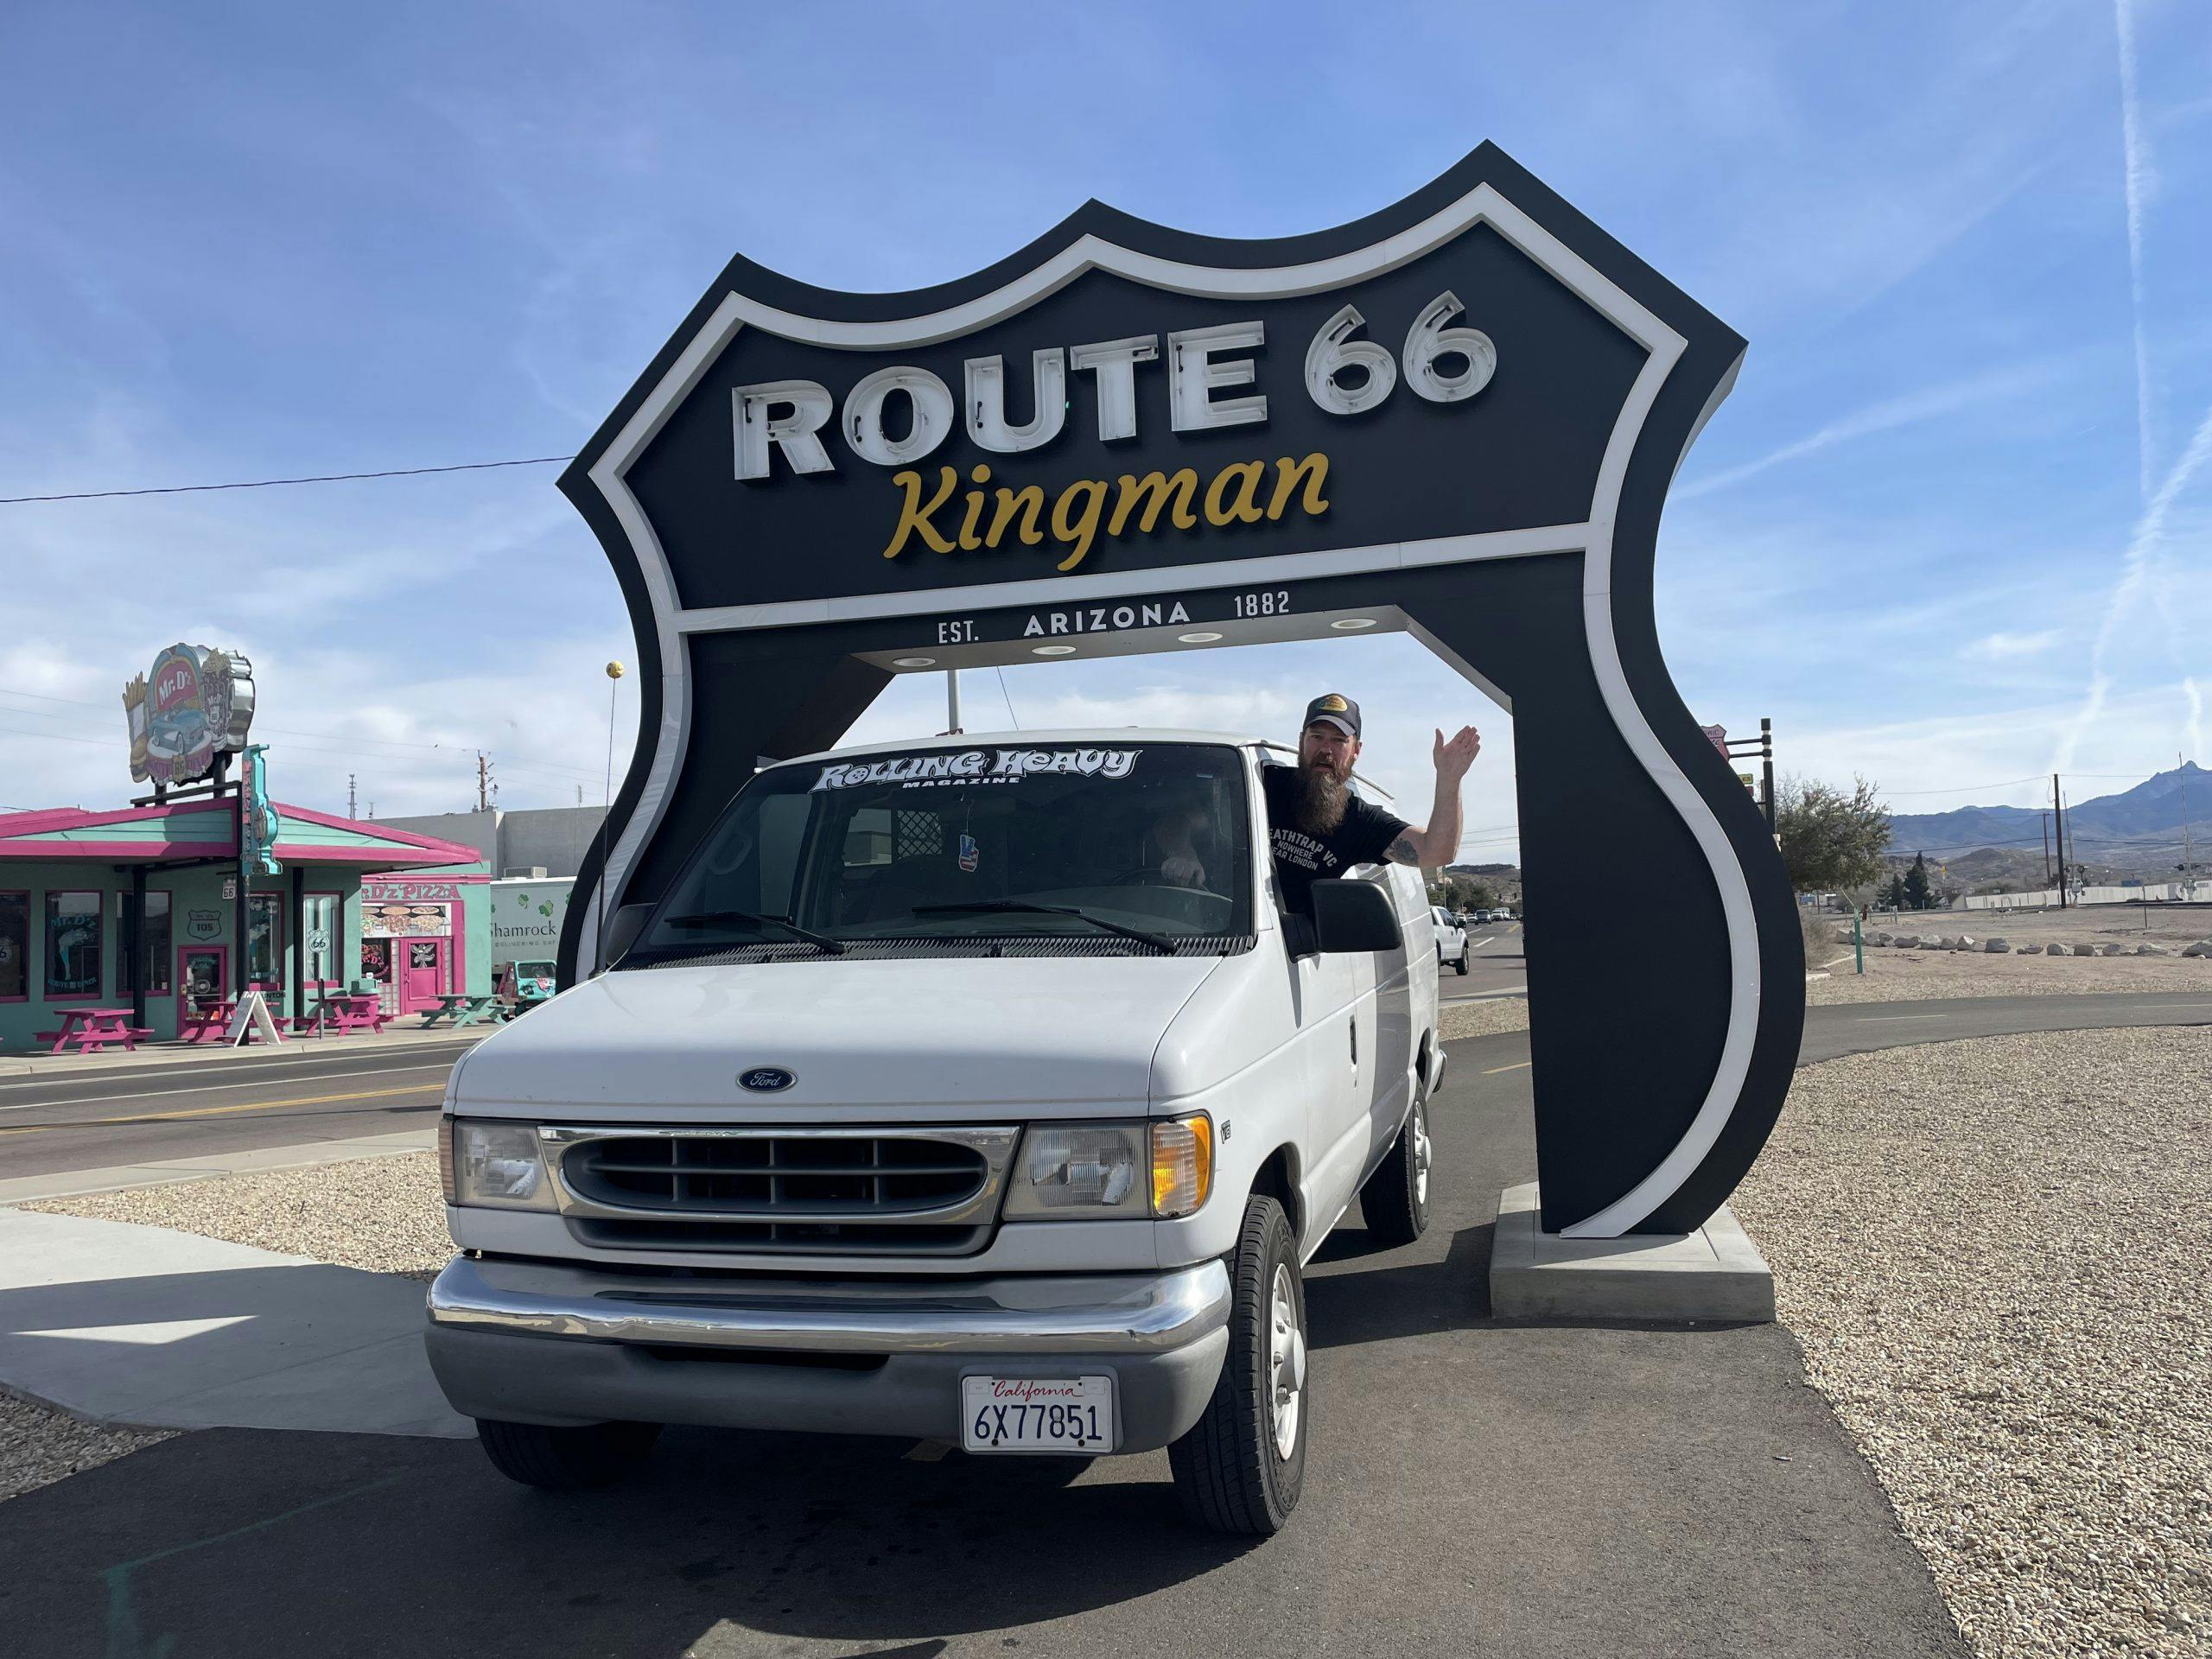 Route 66 Kingman AZ